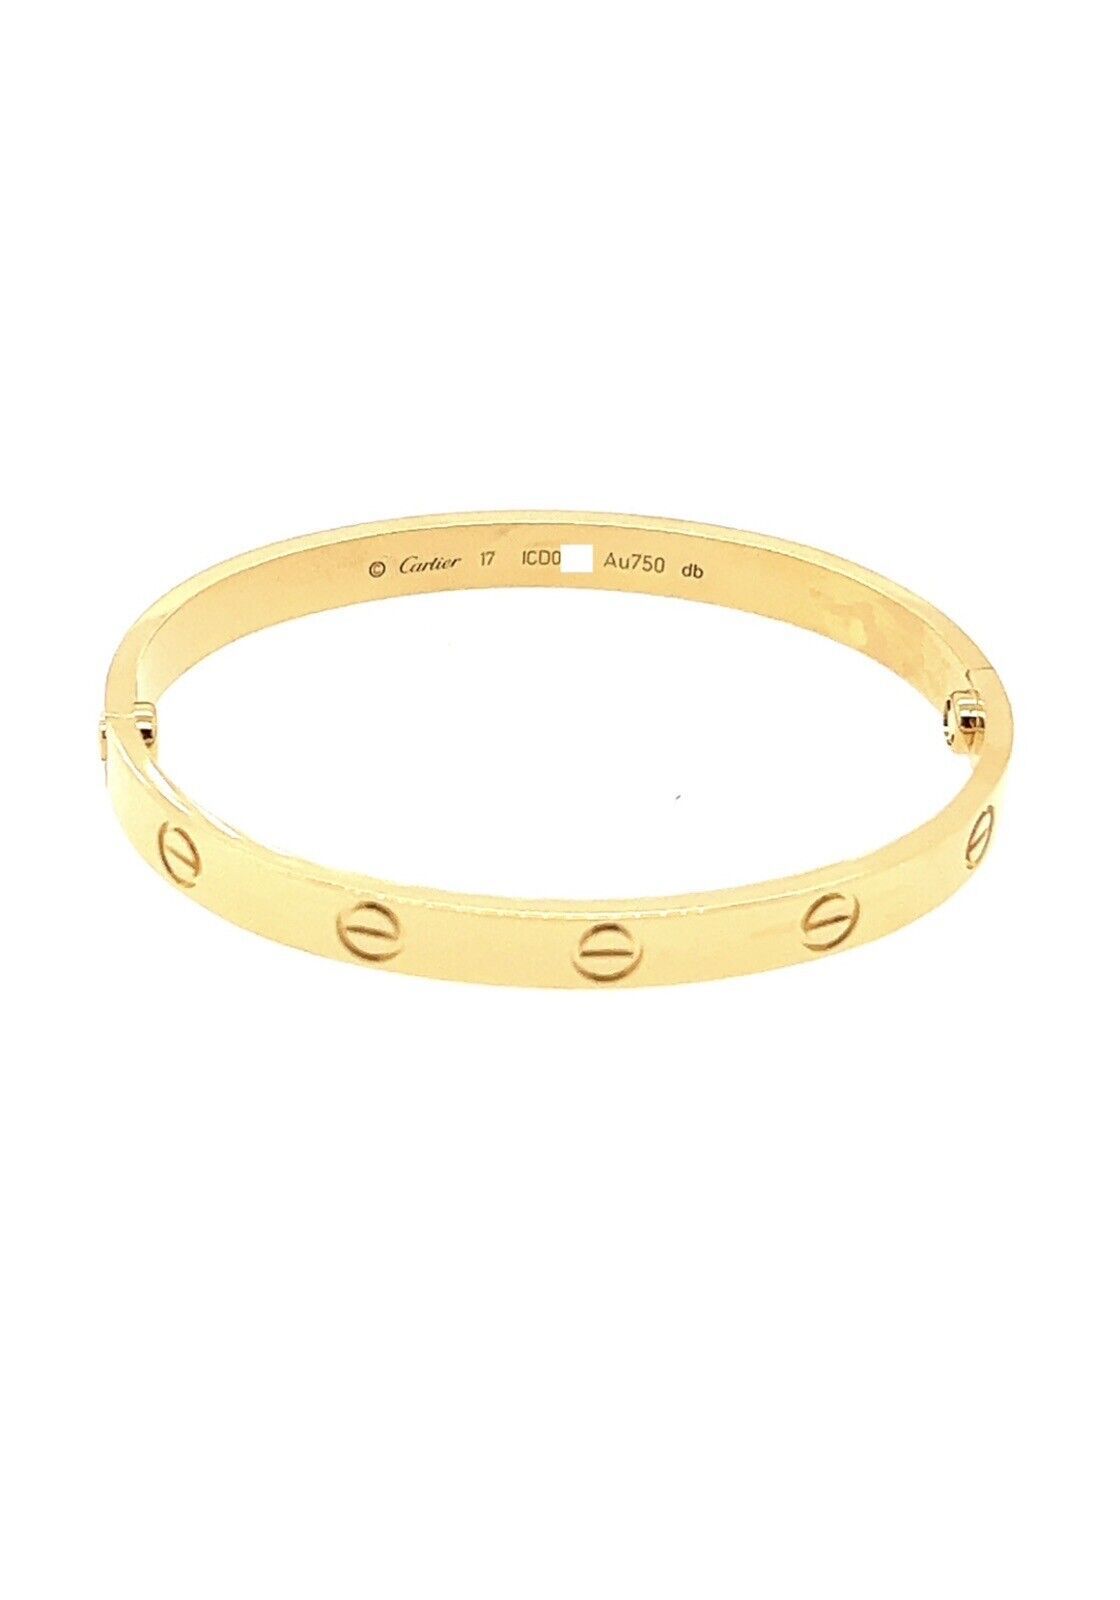 ?Authentic Cartier 18k Yellow gold Love Bracelet Size 17 | eBay US